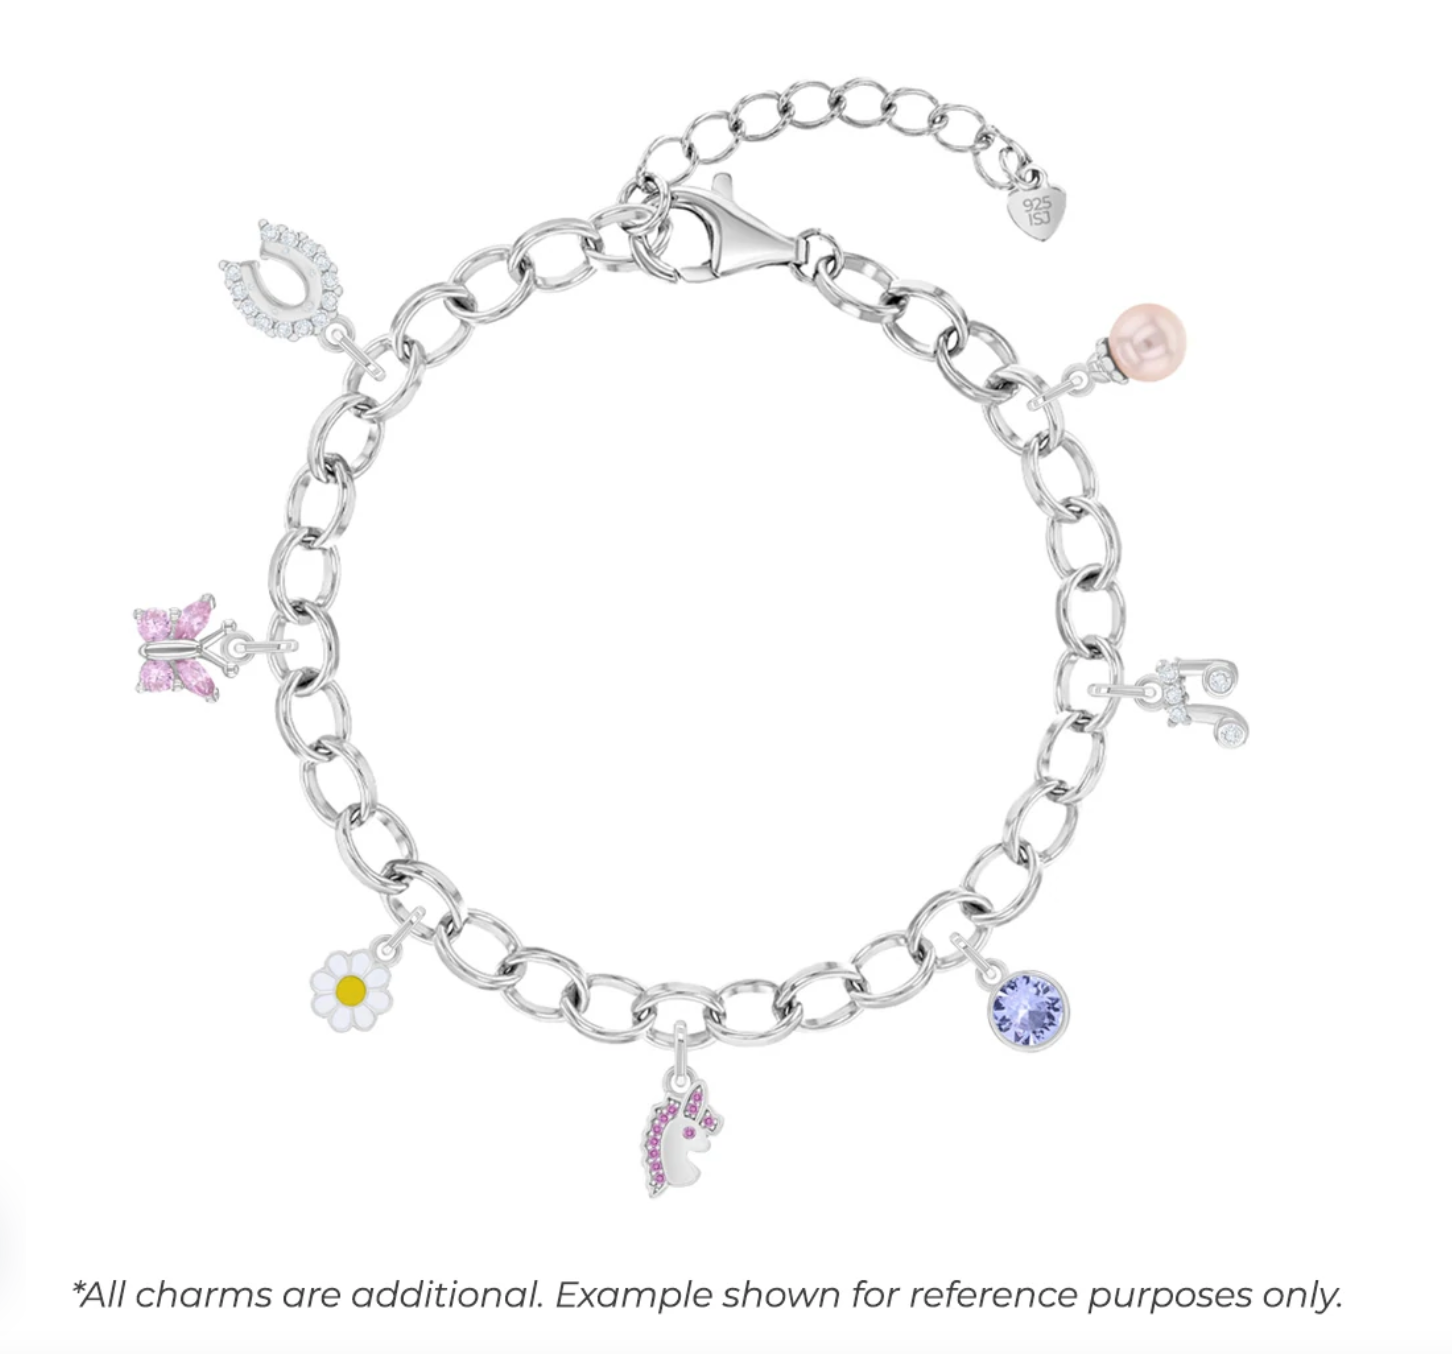 Adjustable Kids Charm Base Link Bracelet - Sterling Silver Girls Chain Bracelet to Add Charms 5